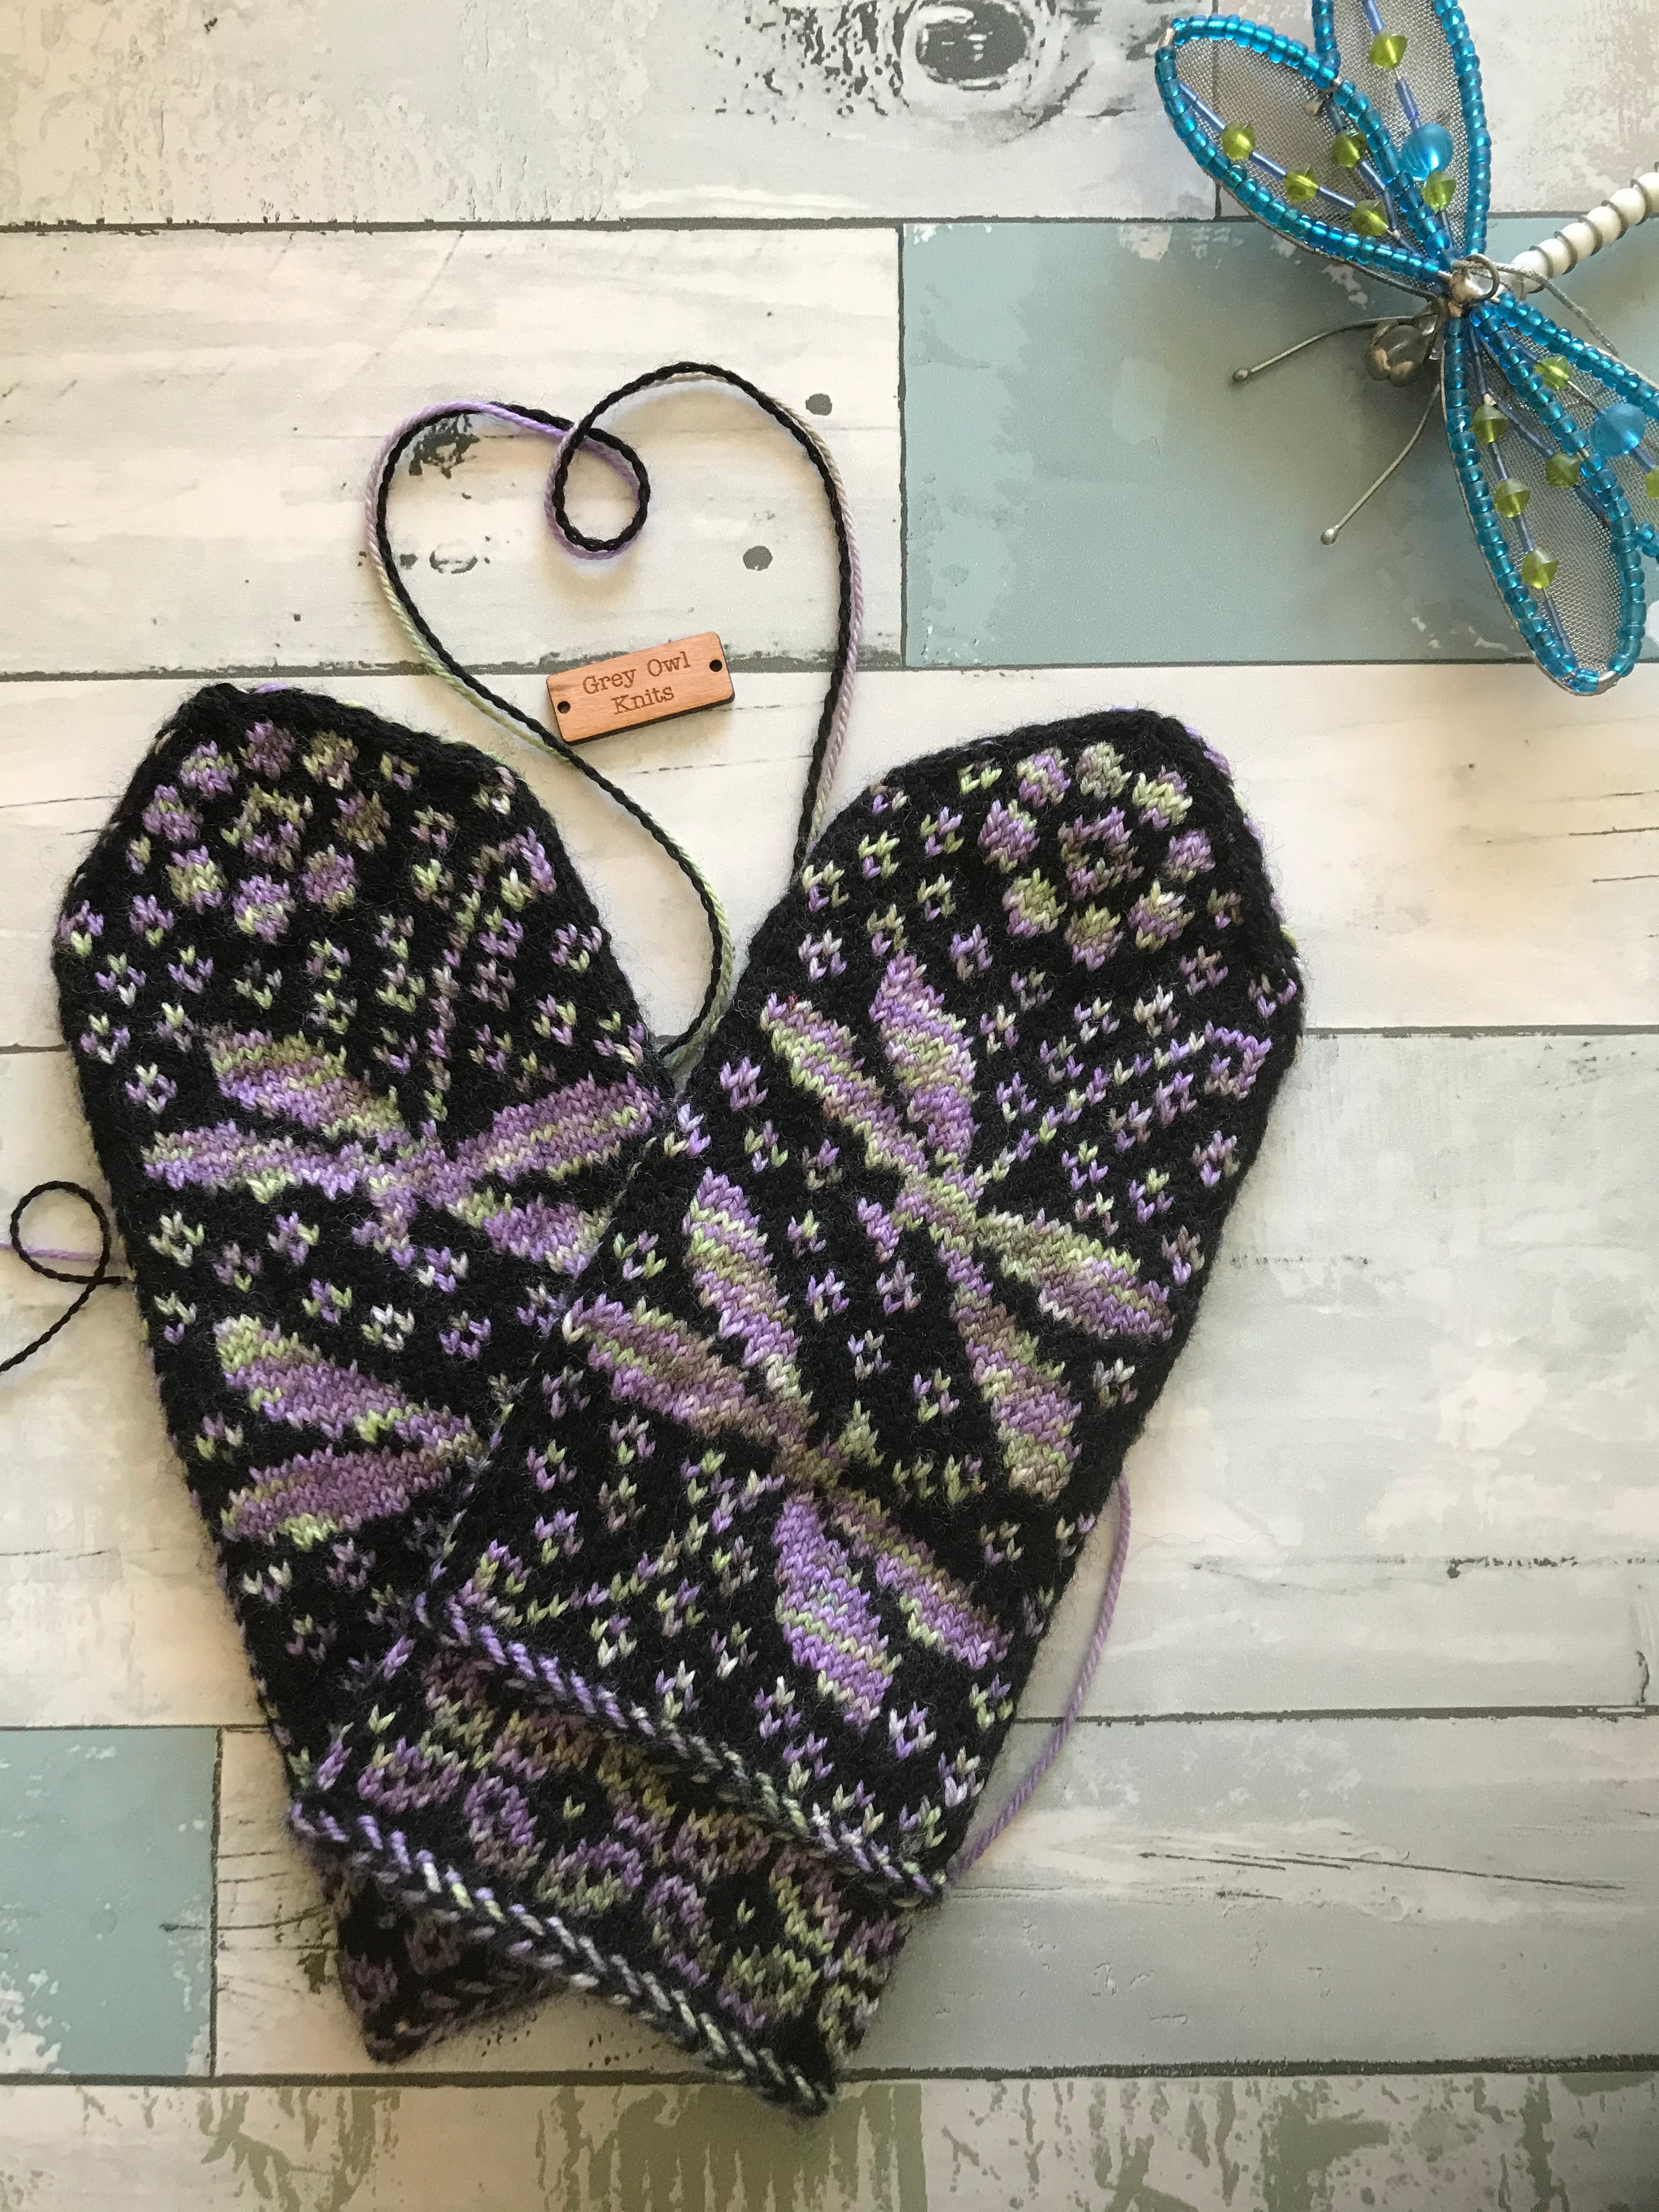 Yarn for Dragonfly Mitten Patterns